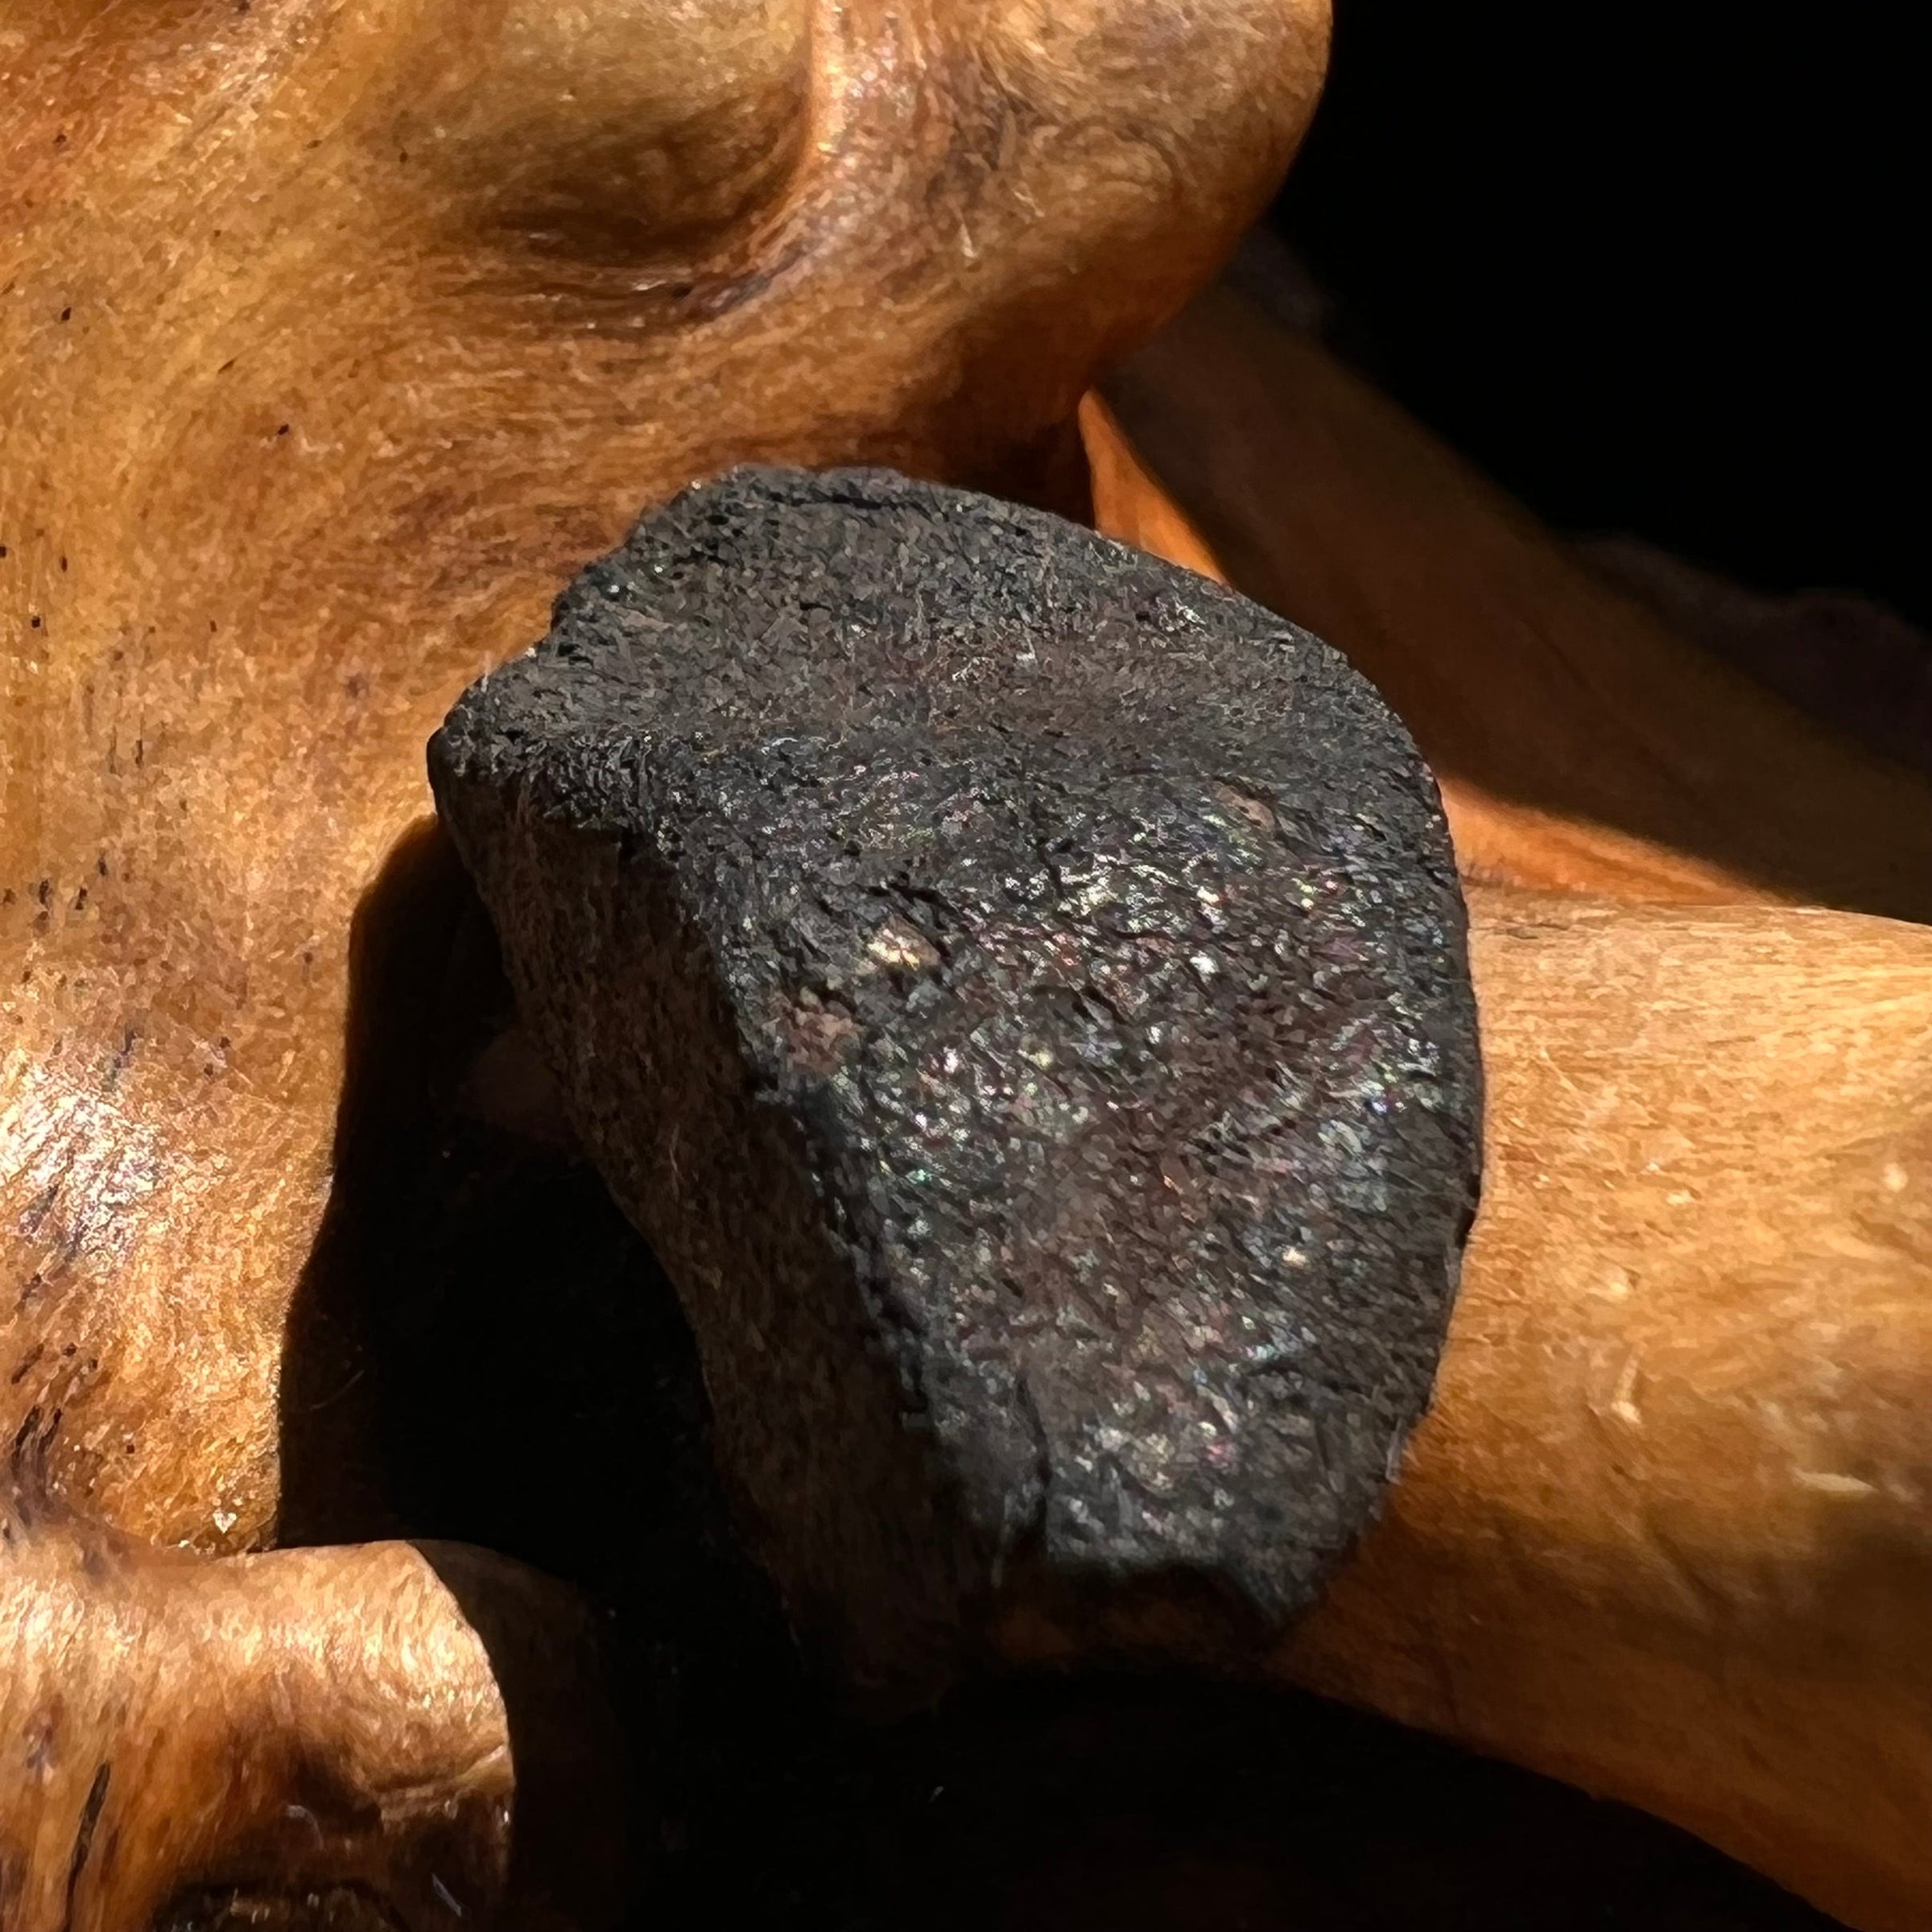 Chelyabinsk Meteorite Superbolide Asteroid 2.4 grams #68-Moldavite Life